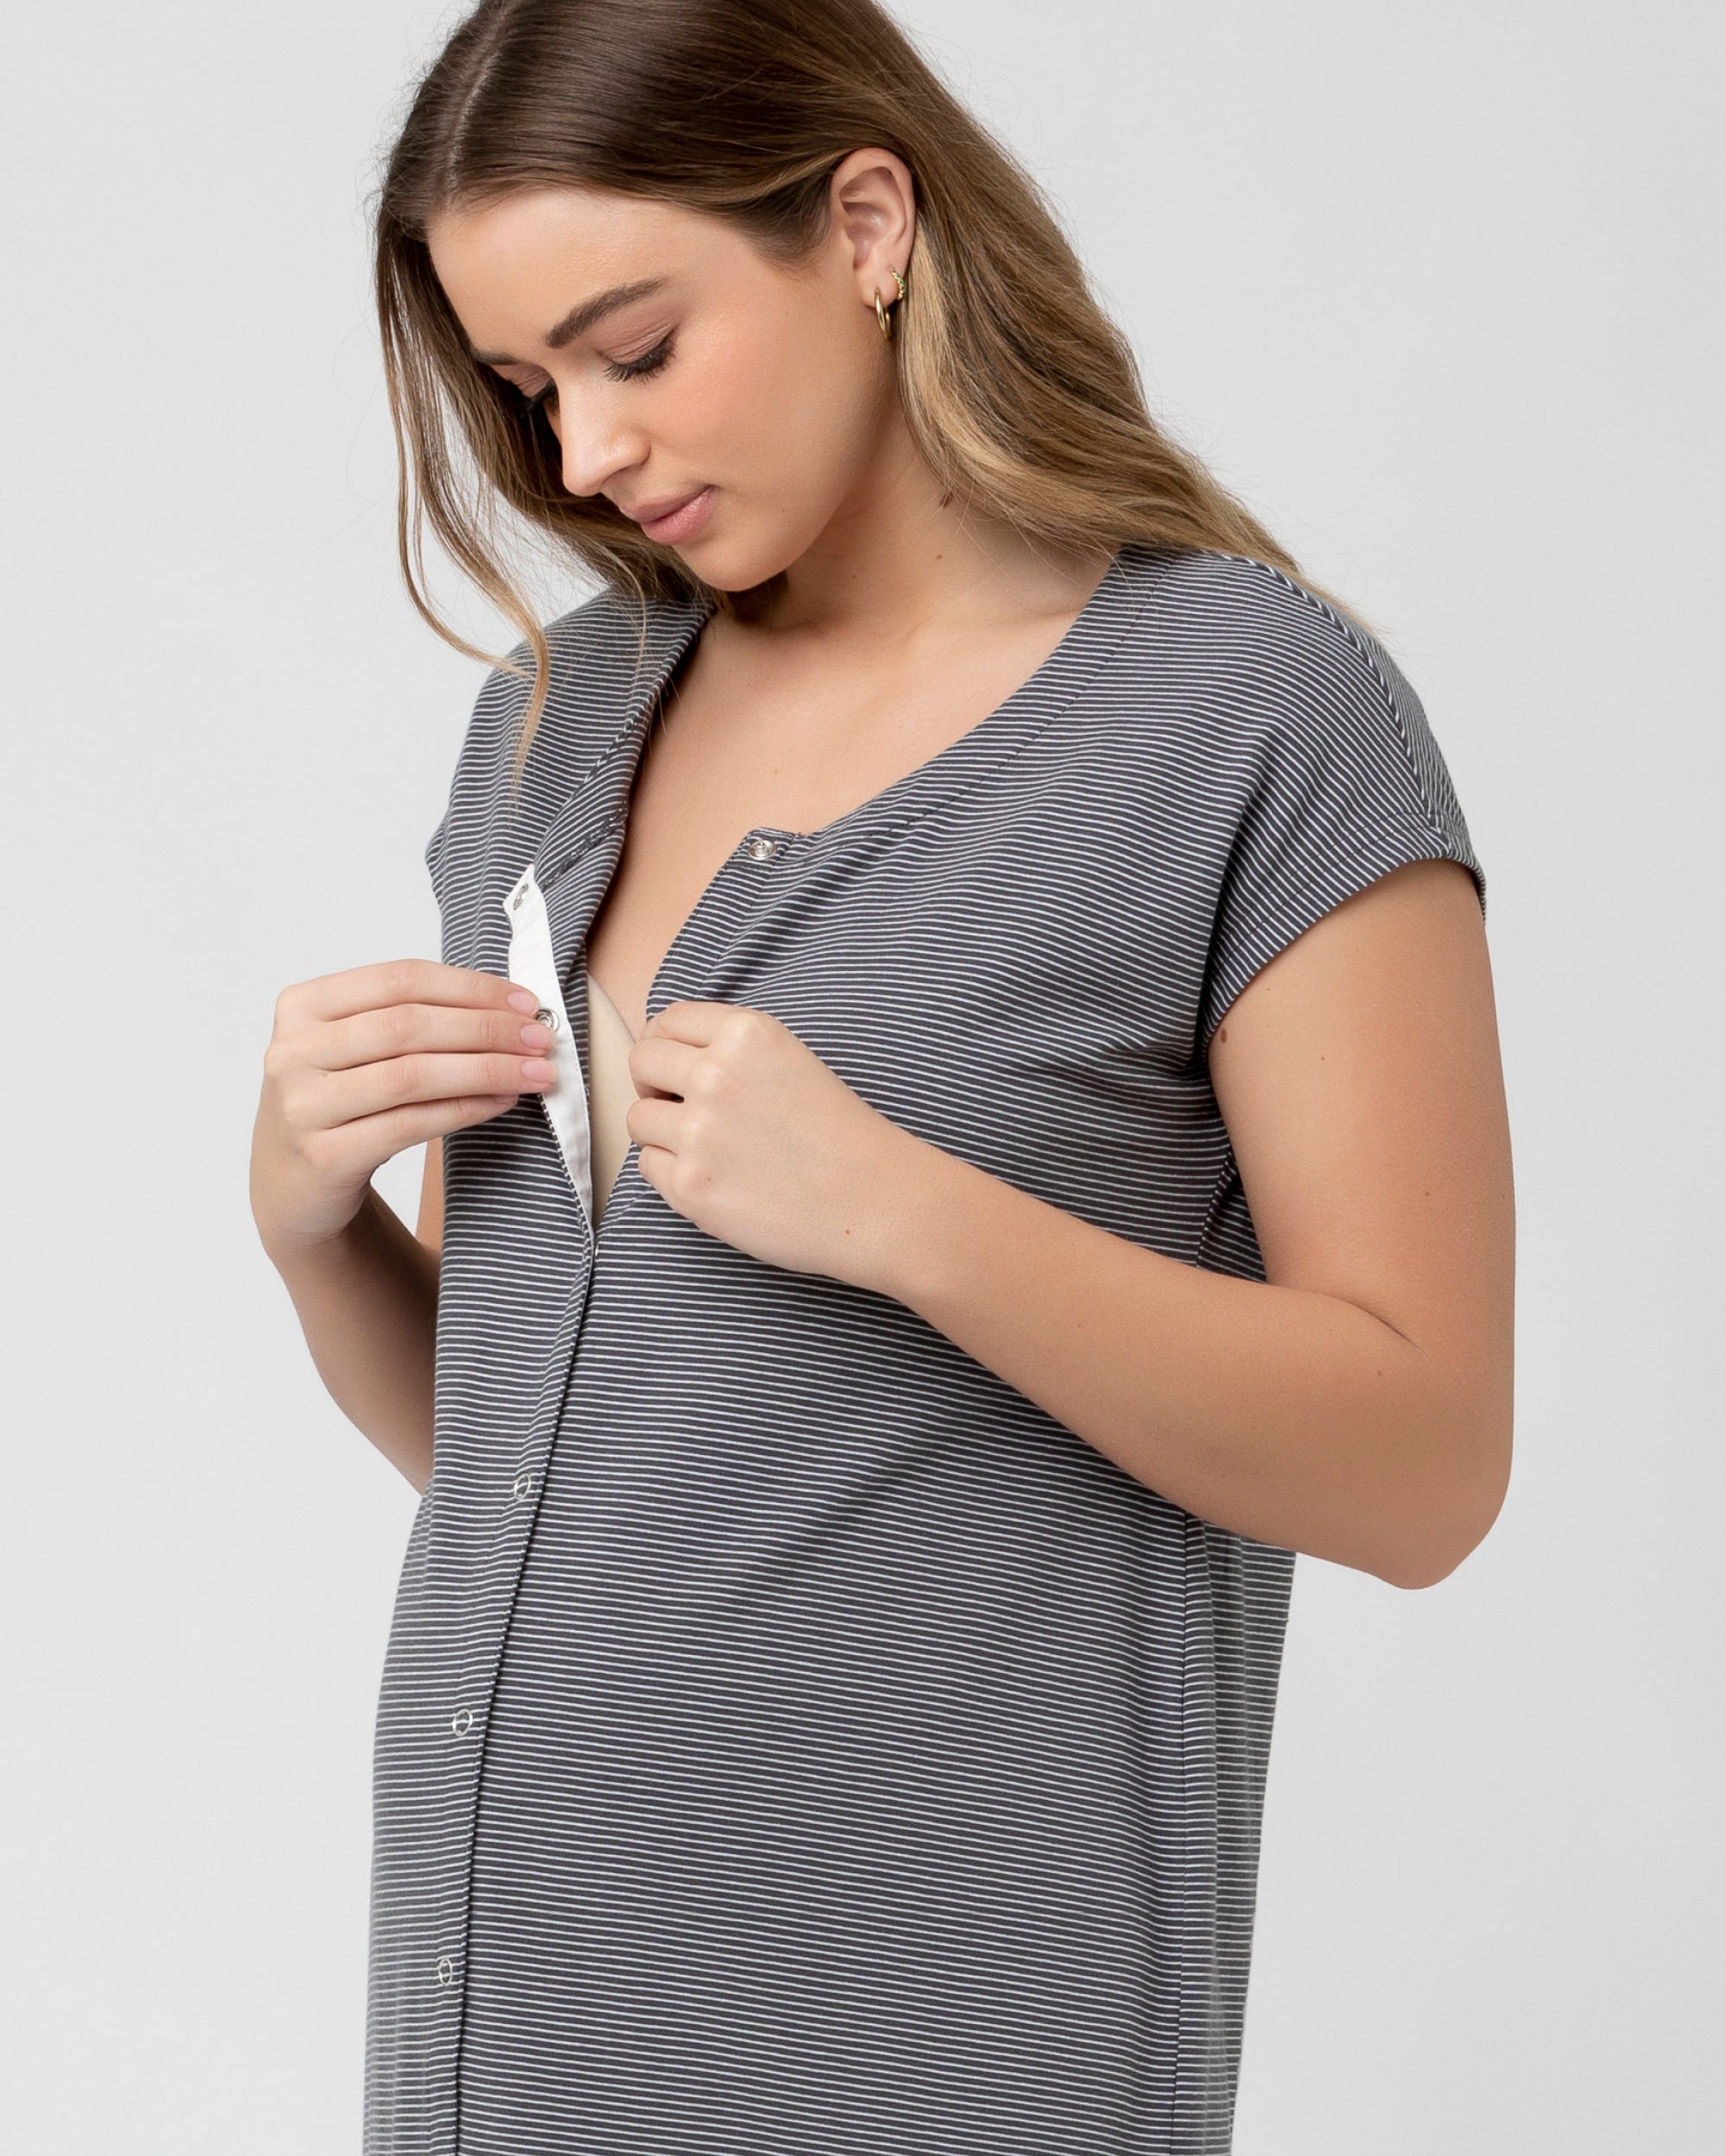 Sykooria Women's Maternity Nightdress Breastfeeding Nightwear Short Sleeve  Nursing Nightgown Button Down Sleep Shirt V Neck